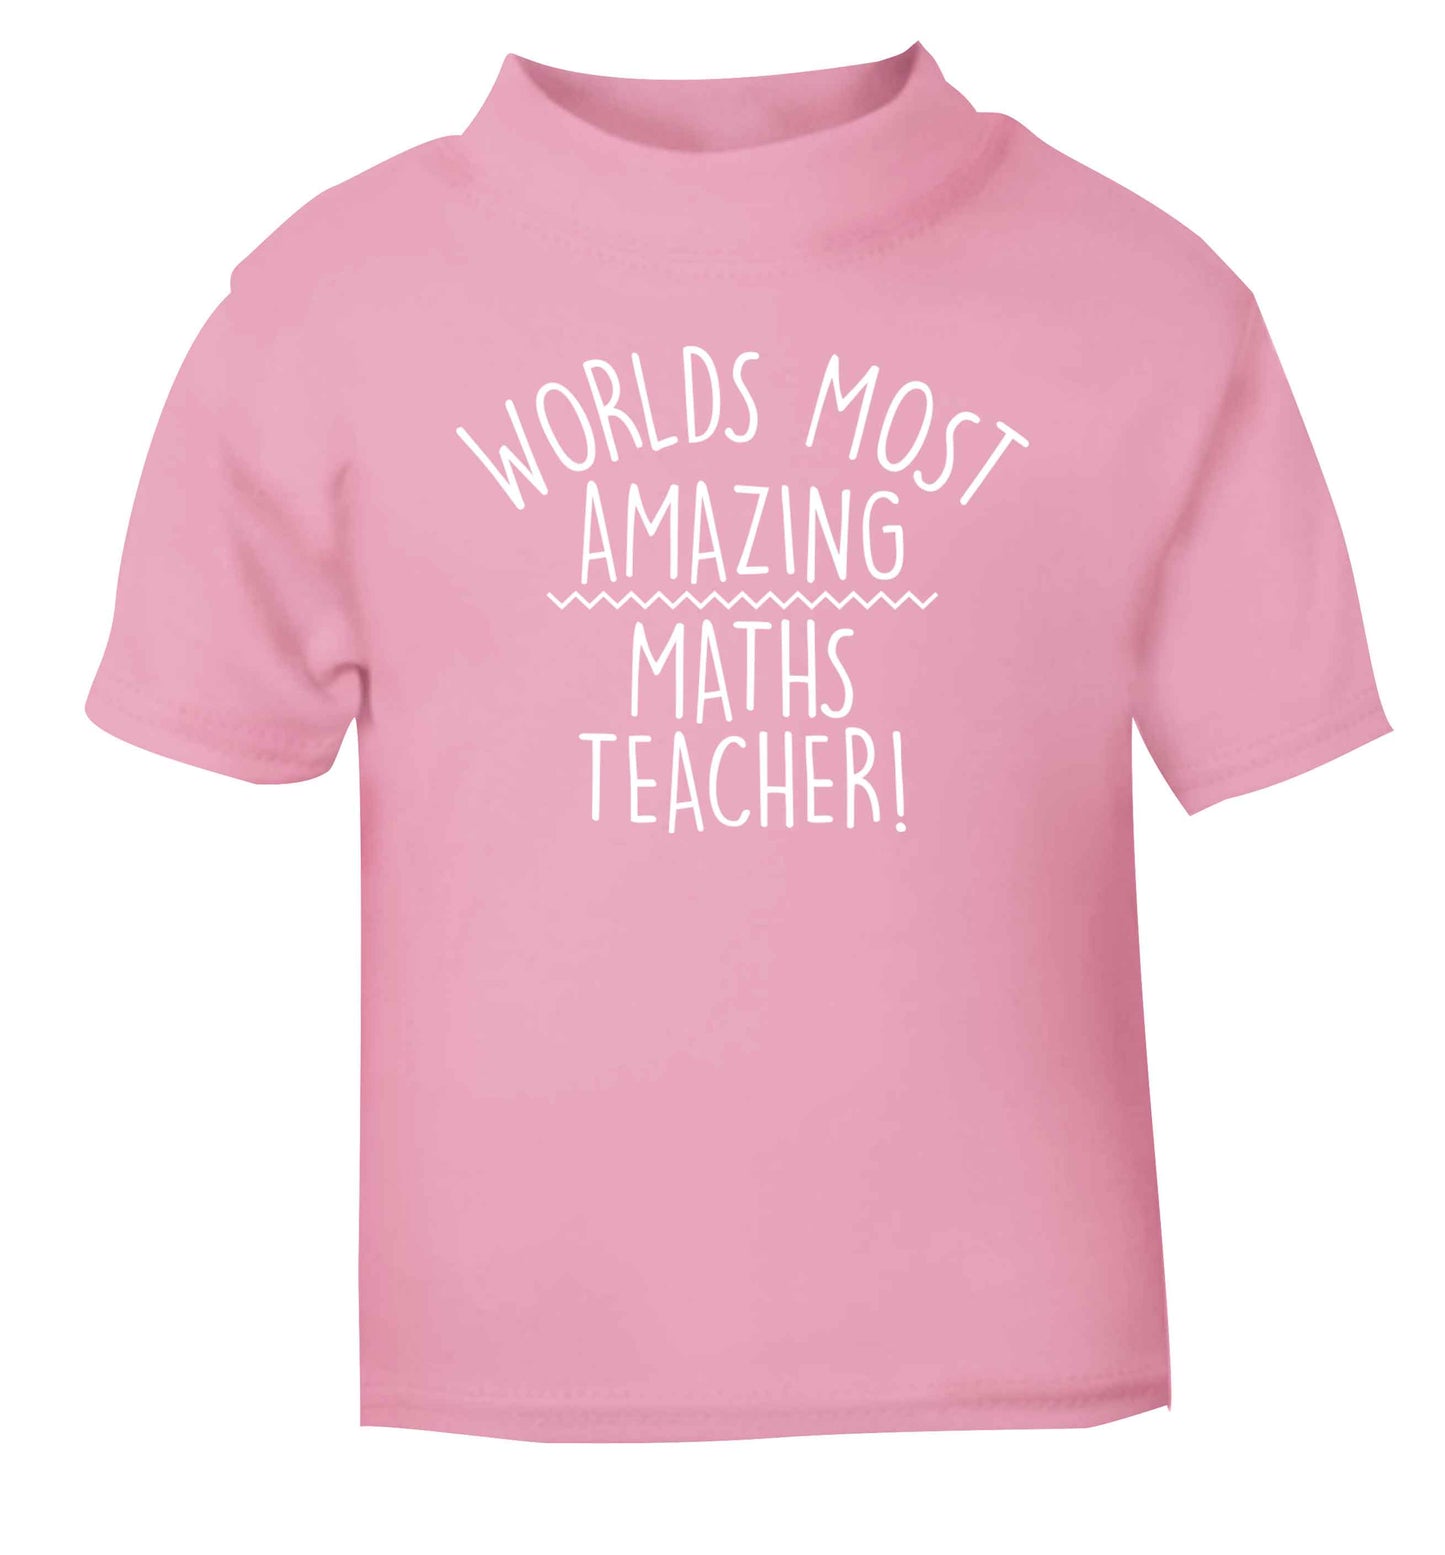 Worlds most amazing maths teacher light pink baby toddler Tshirt 2 Years